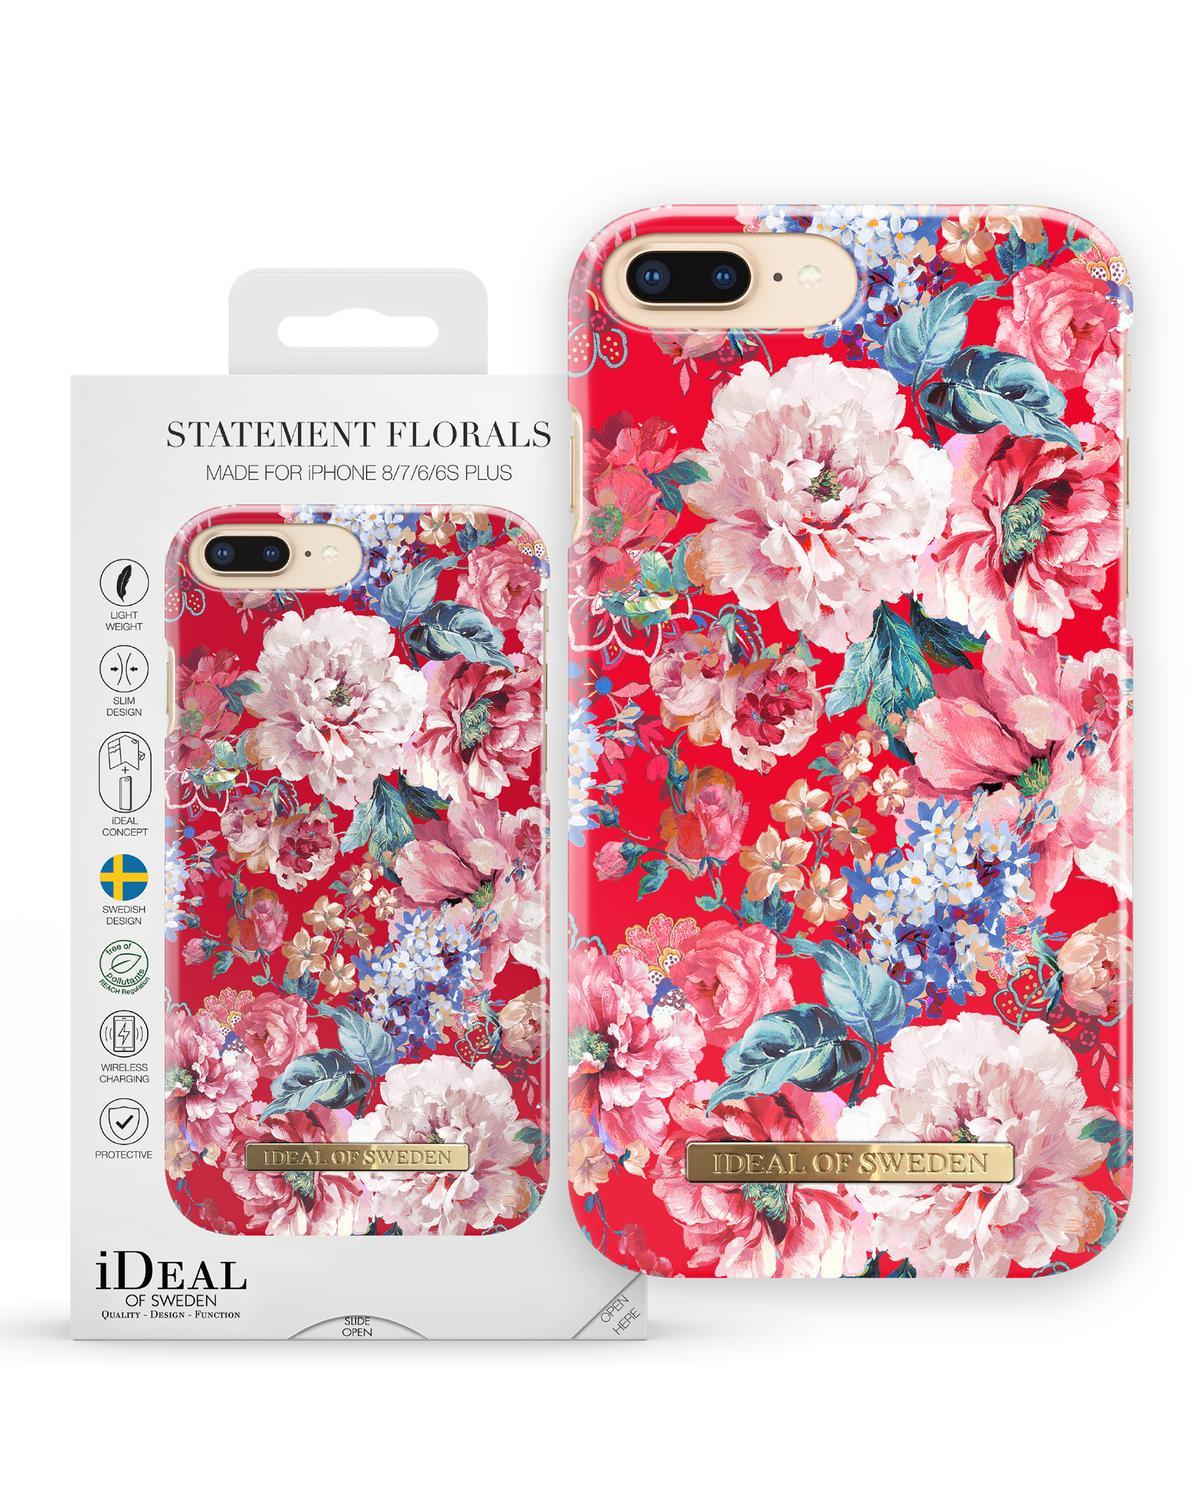 iDeal Fashion Case iPhone 8/7/6S Plus - Statement Florals - Sunnerbergteknik